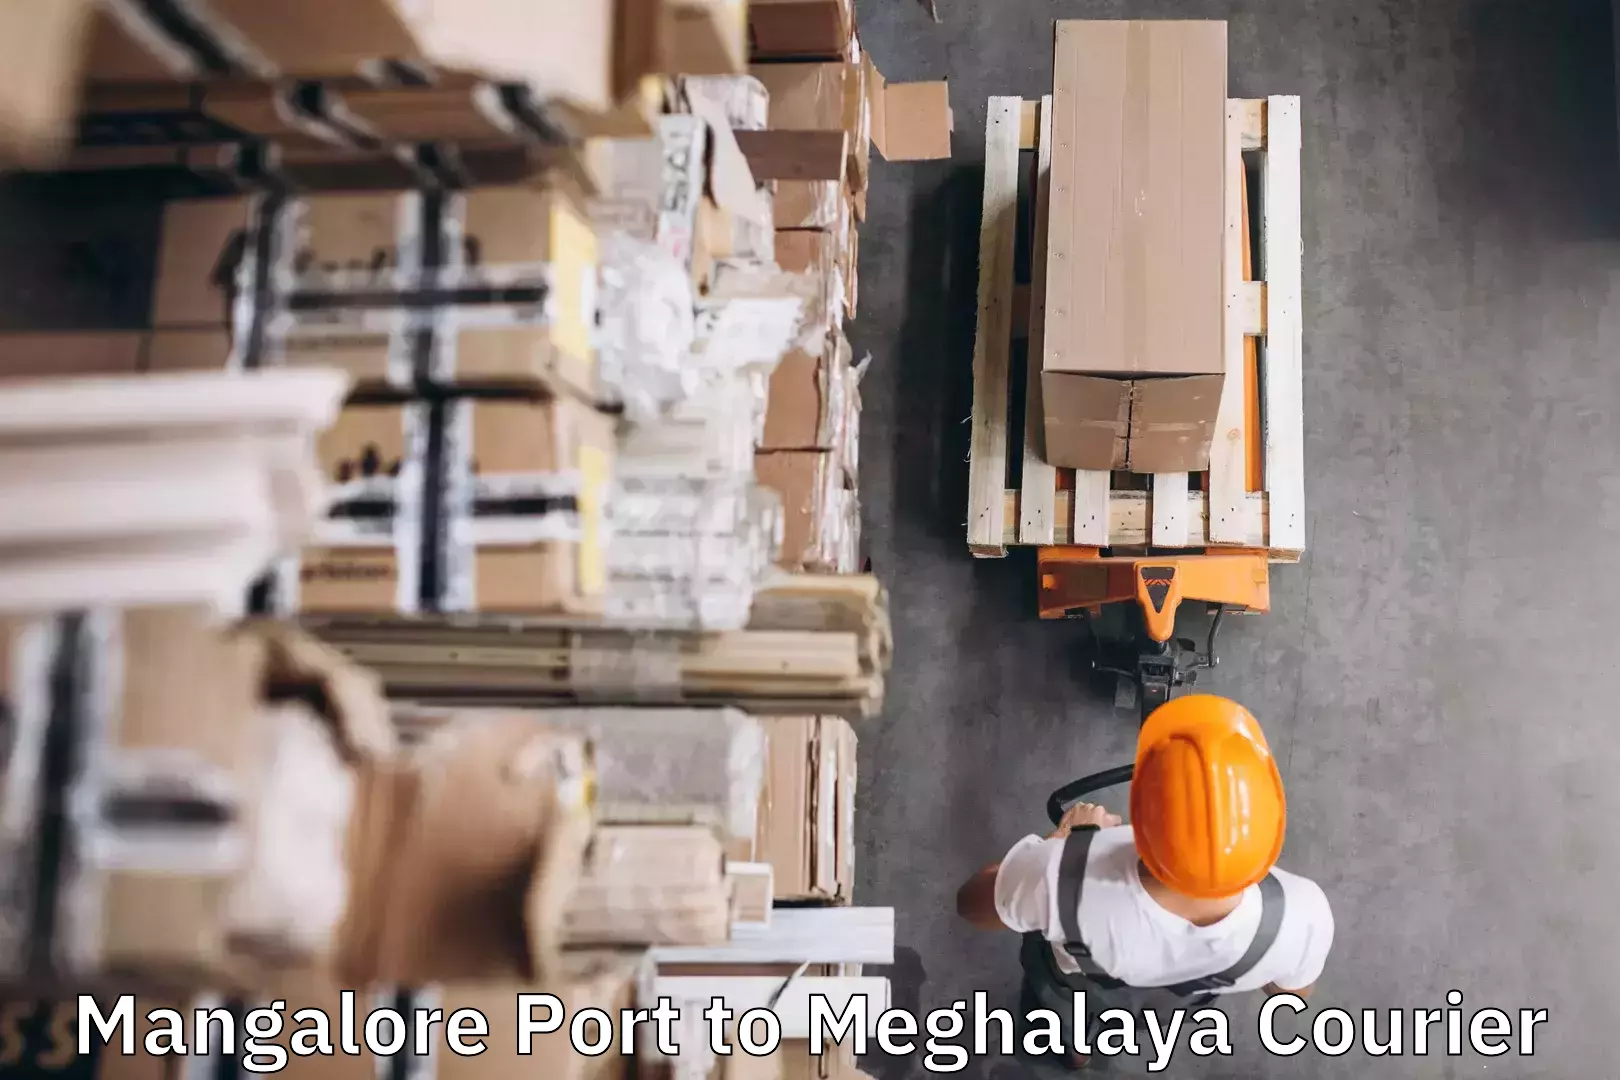 Luggage shipment specialists Mangalore Port to Meghalaya